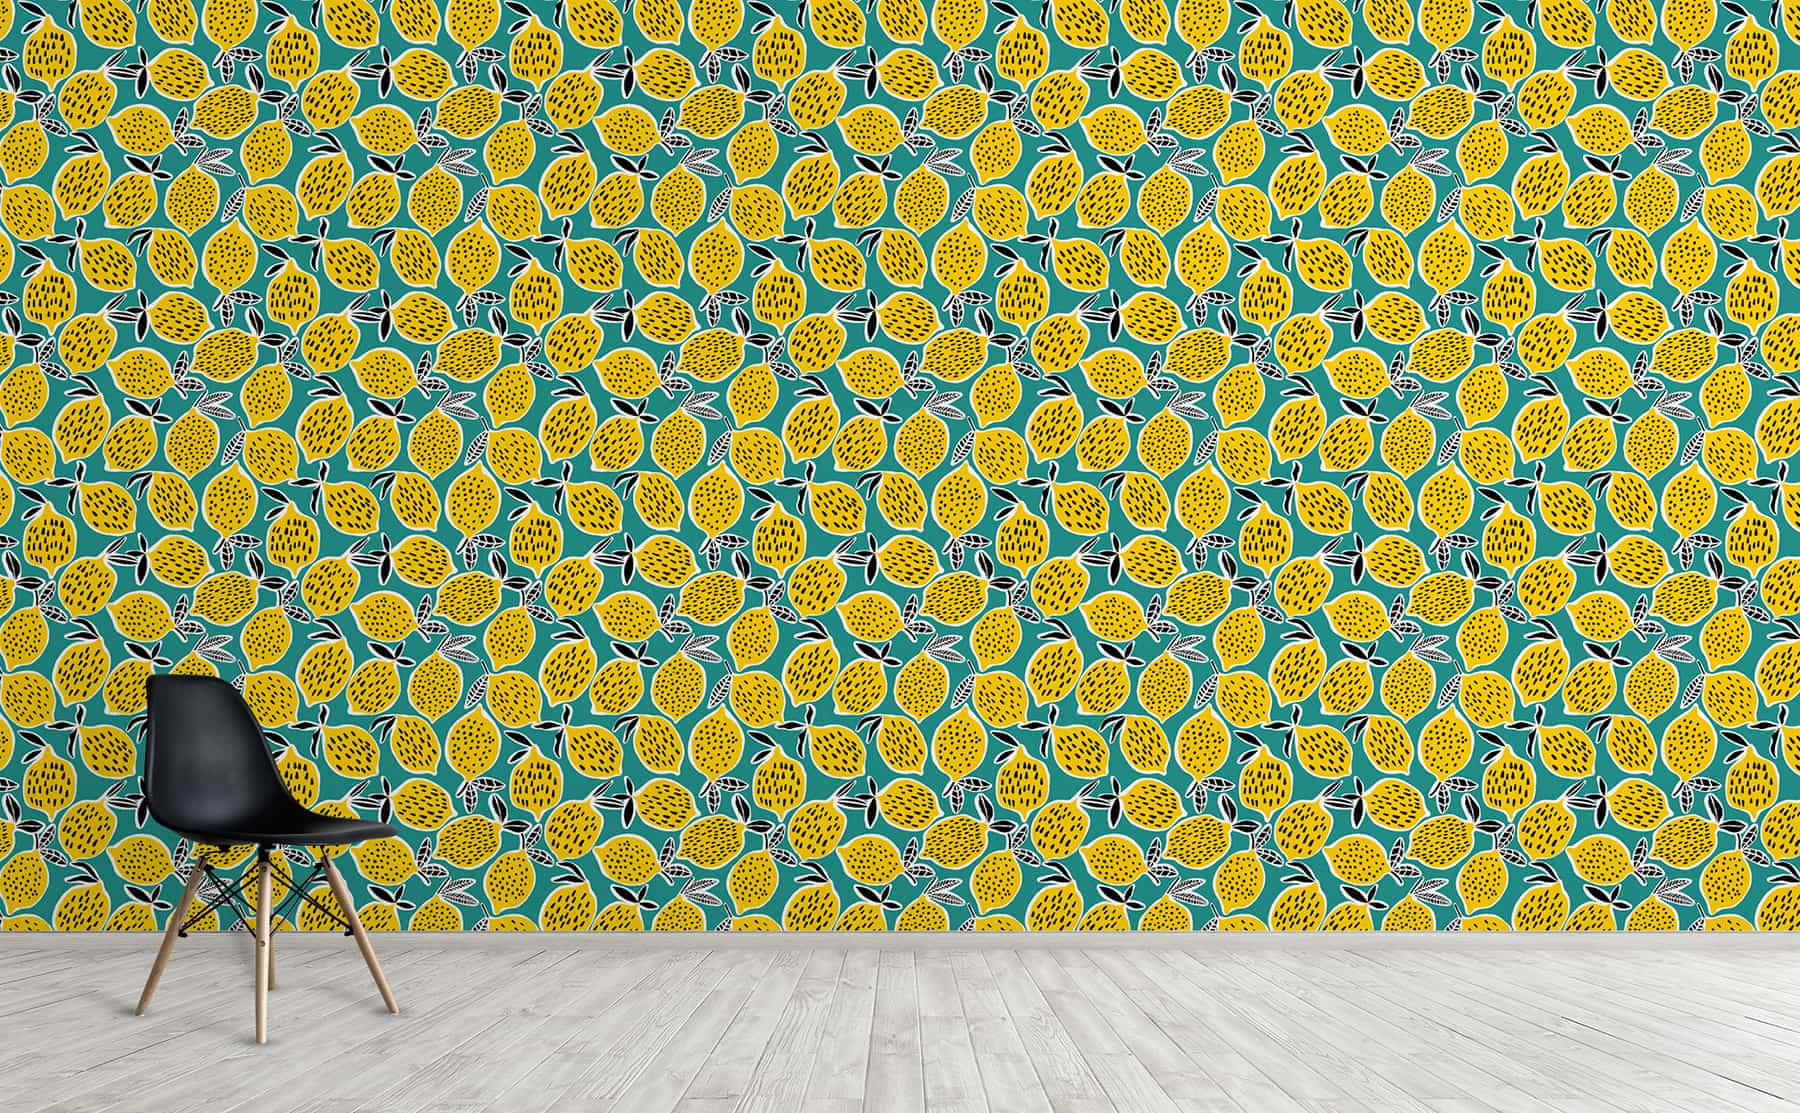 Zesty Lemon Wall Design Wallpaper